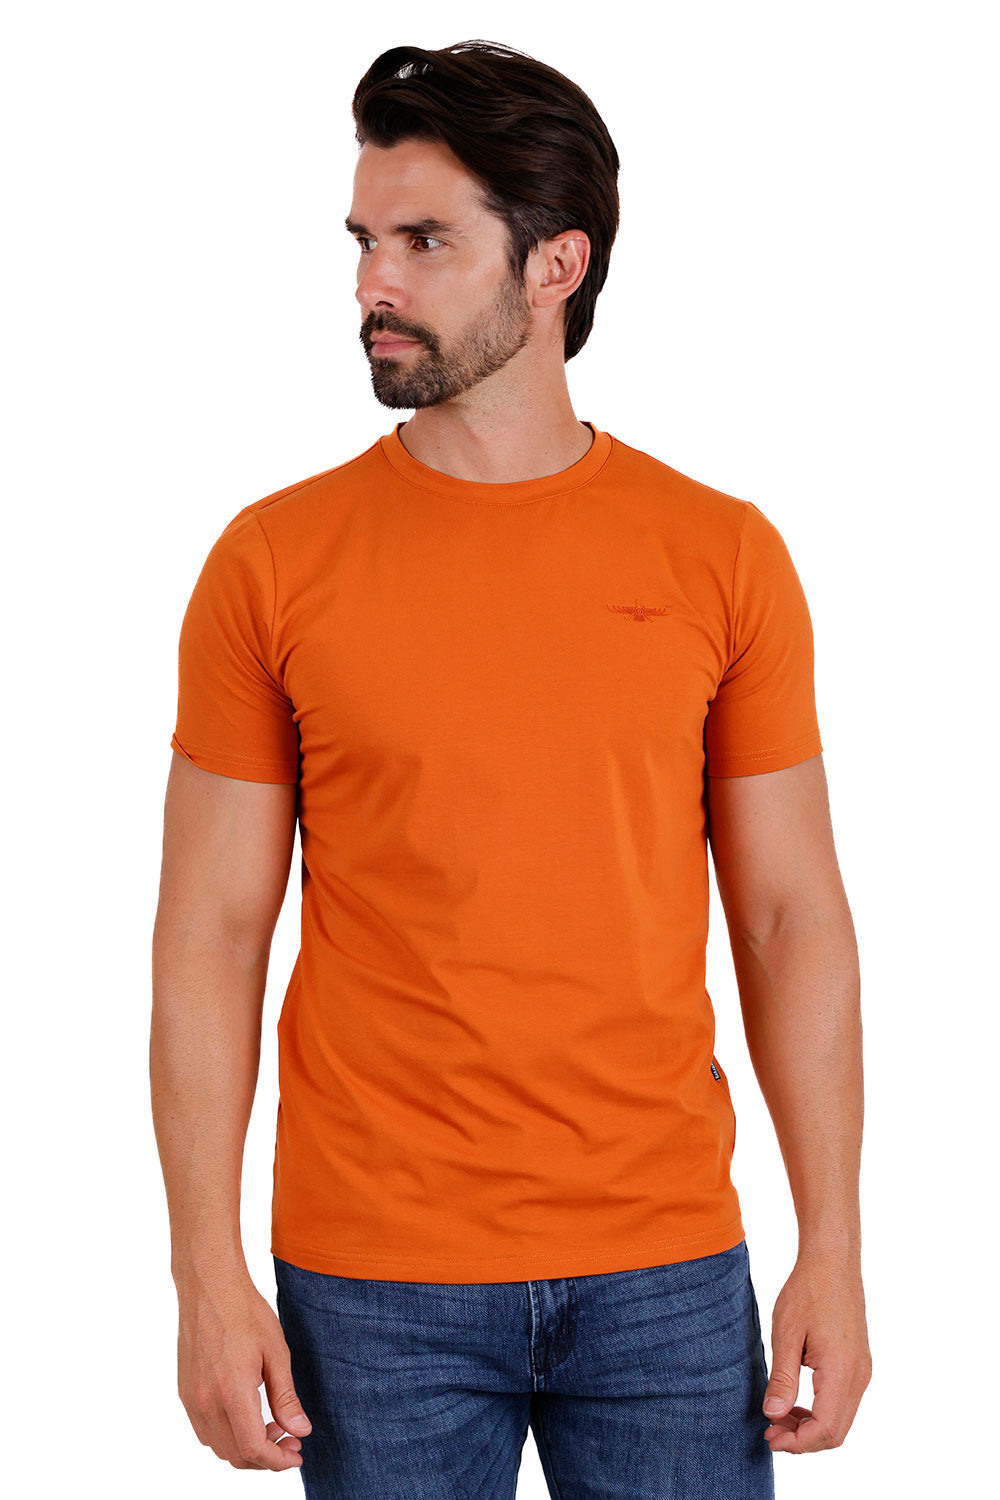 BARABAS Men's Basic Solid Color Crew-neck T-shirts ST933 Rust